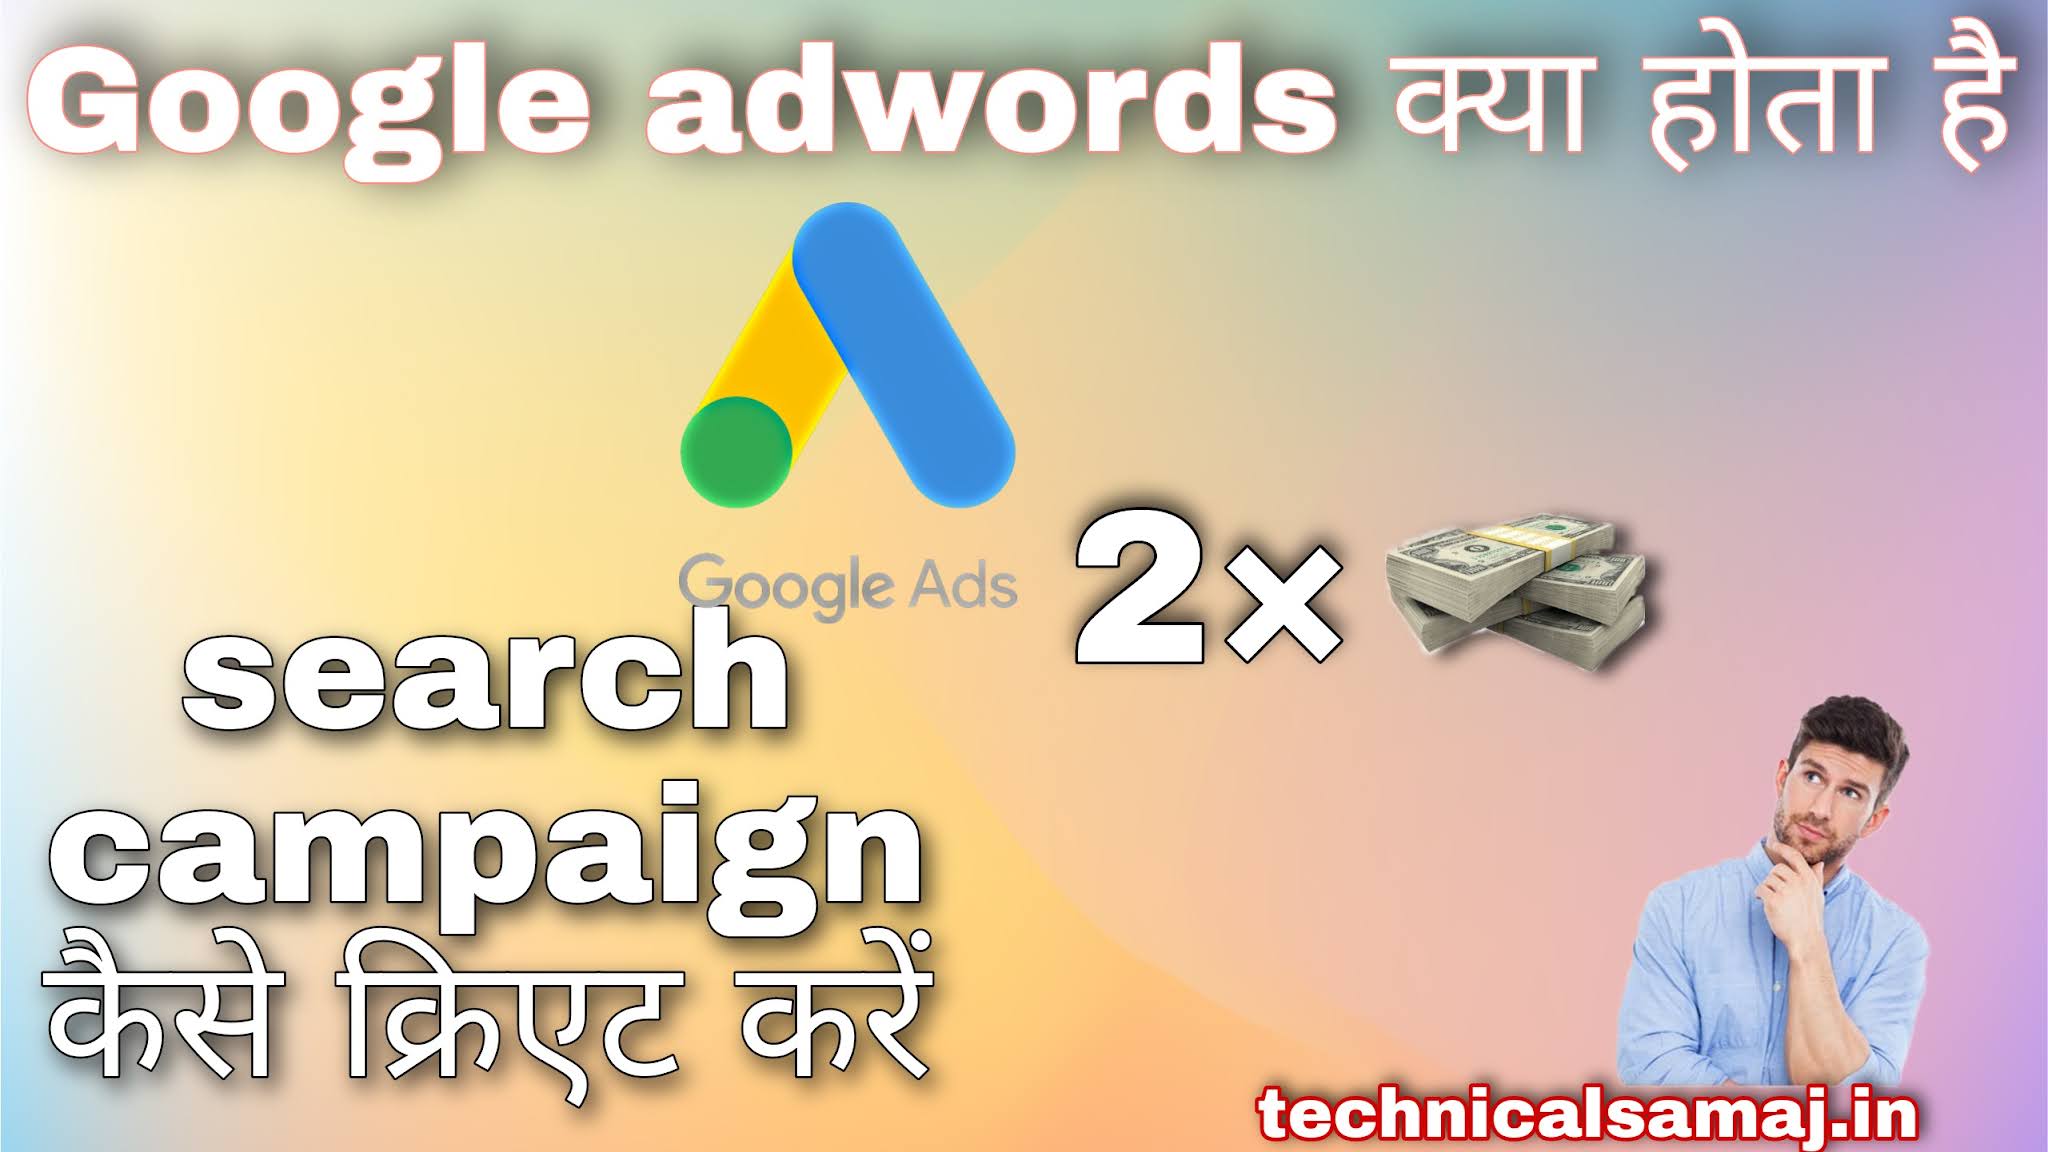 गूगल एडवर्ड्स क्या है?, Google AdWords kya hai ,google adwords kaise chalate hain,google adwords की Search campaign kaise create kiye jaate hain,Google adword in Hindi